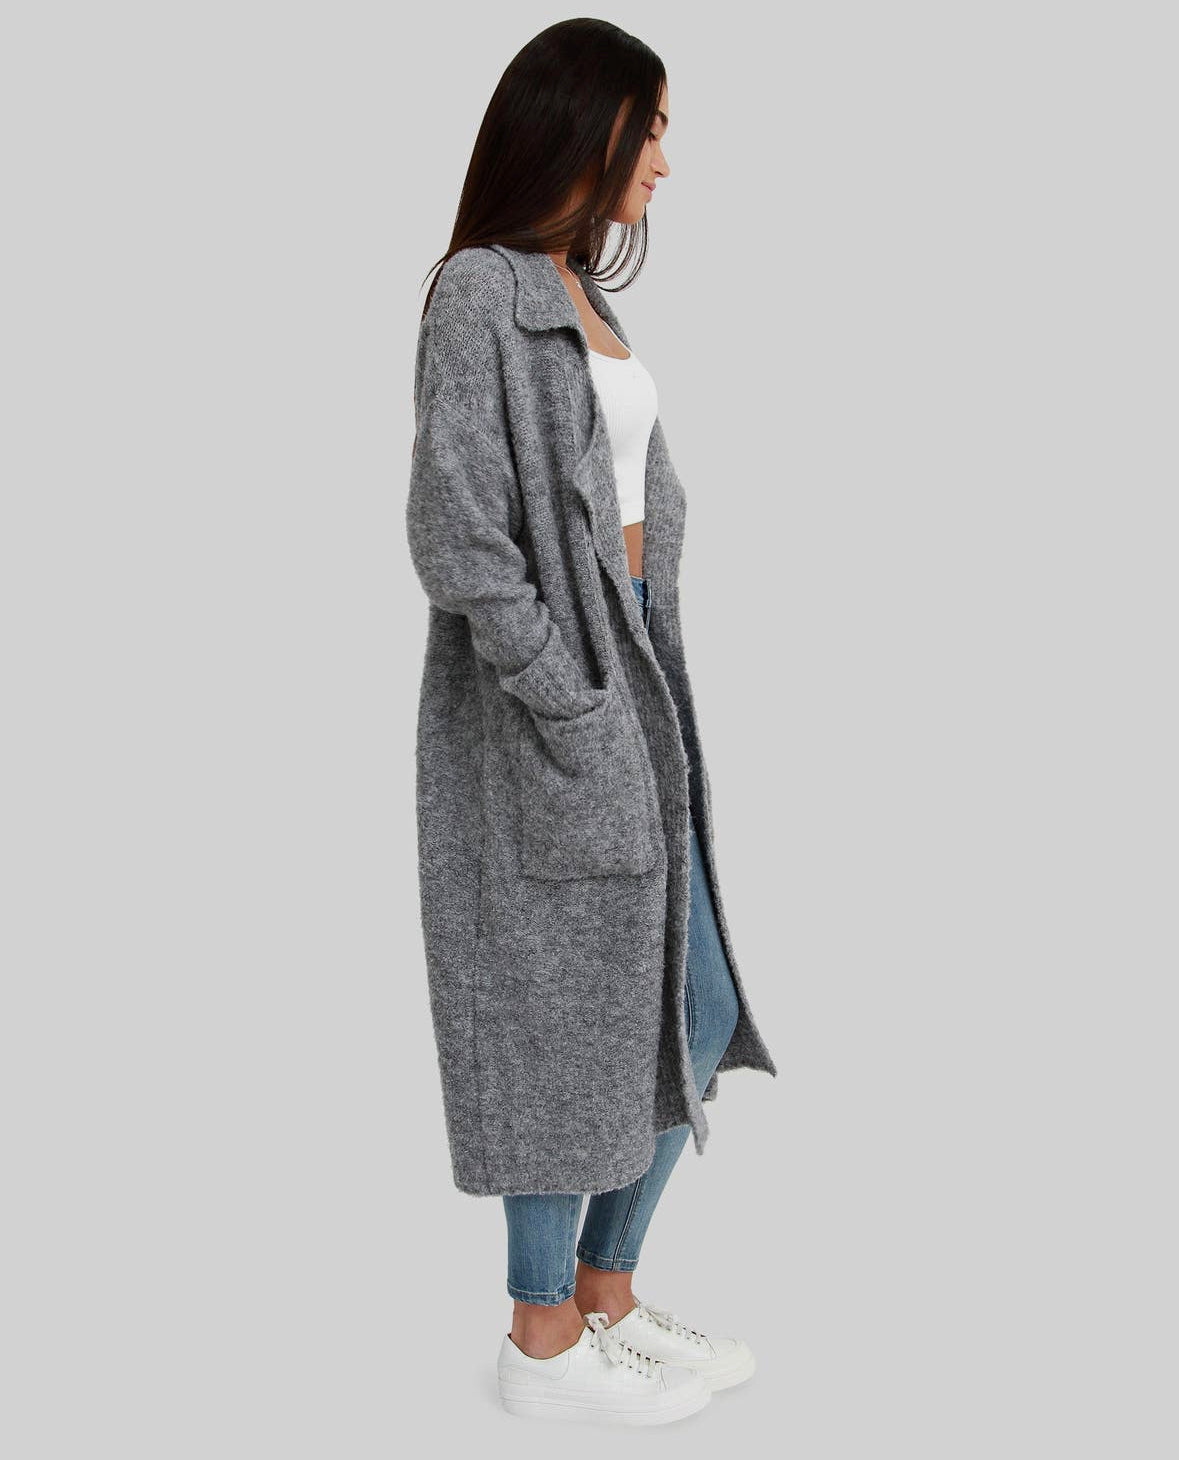 A conscious coatigan in a cozy gray knit, featuring convenient front pockets.